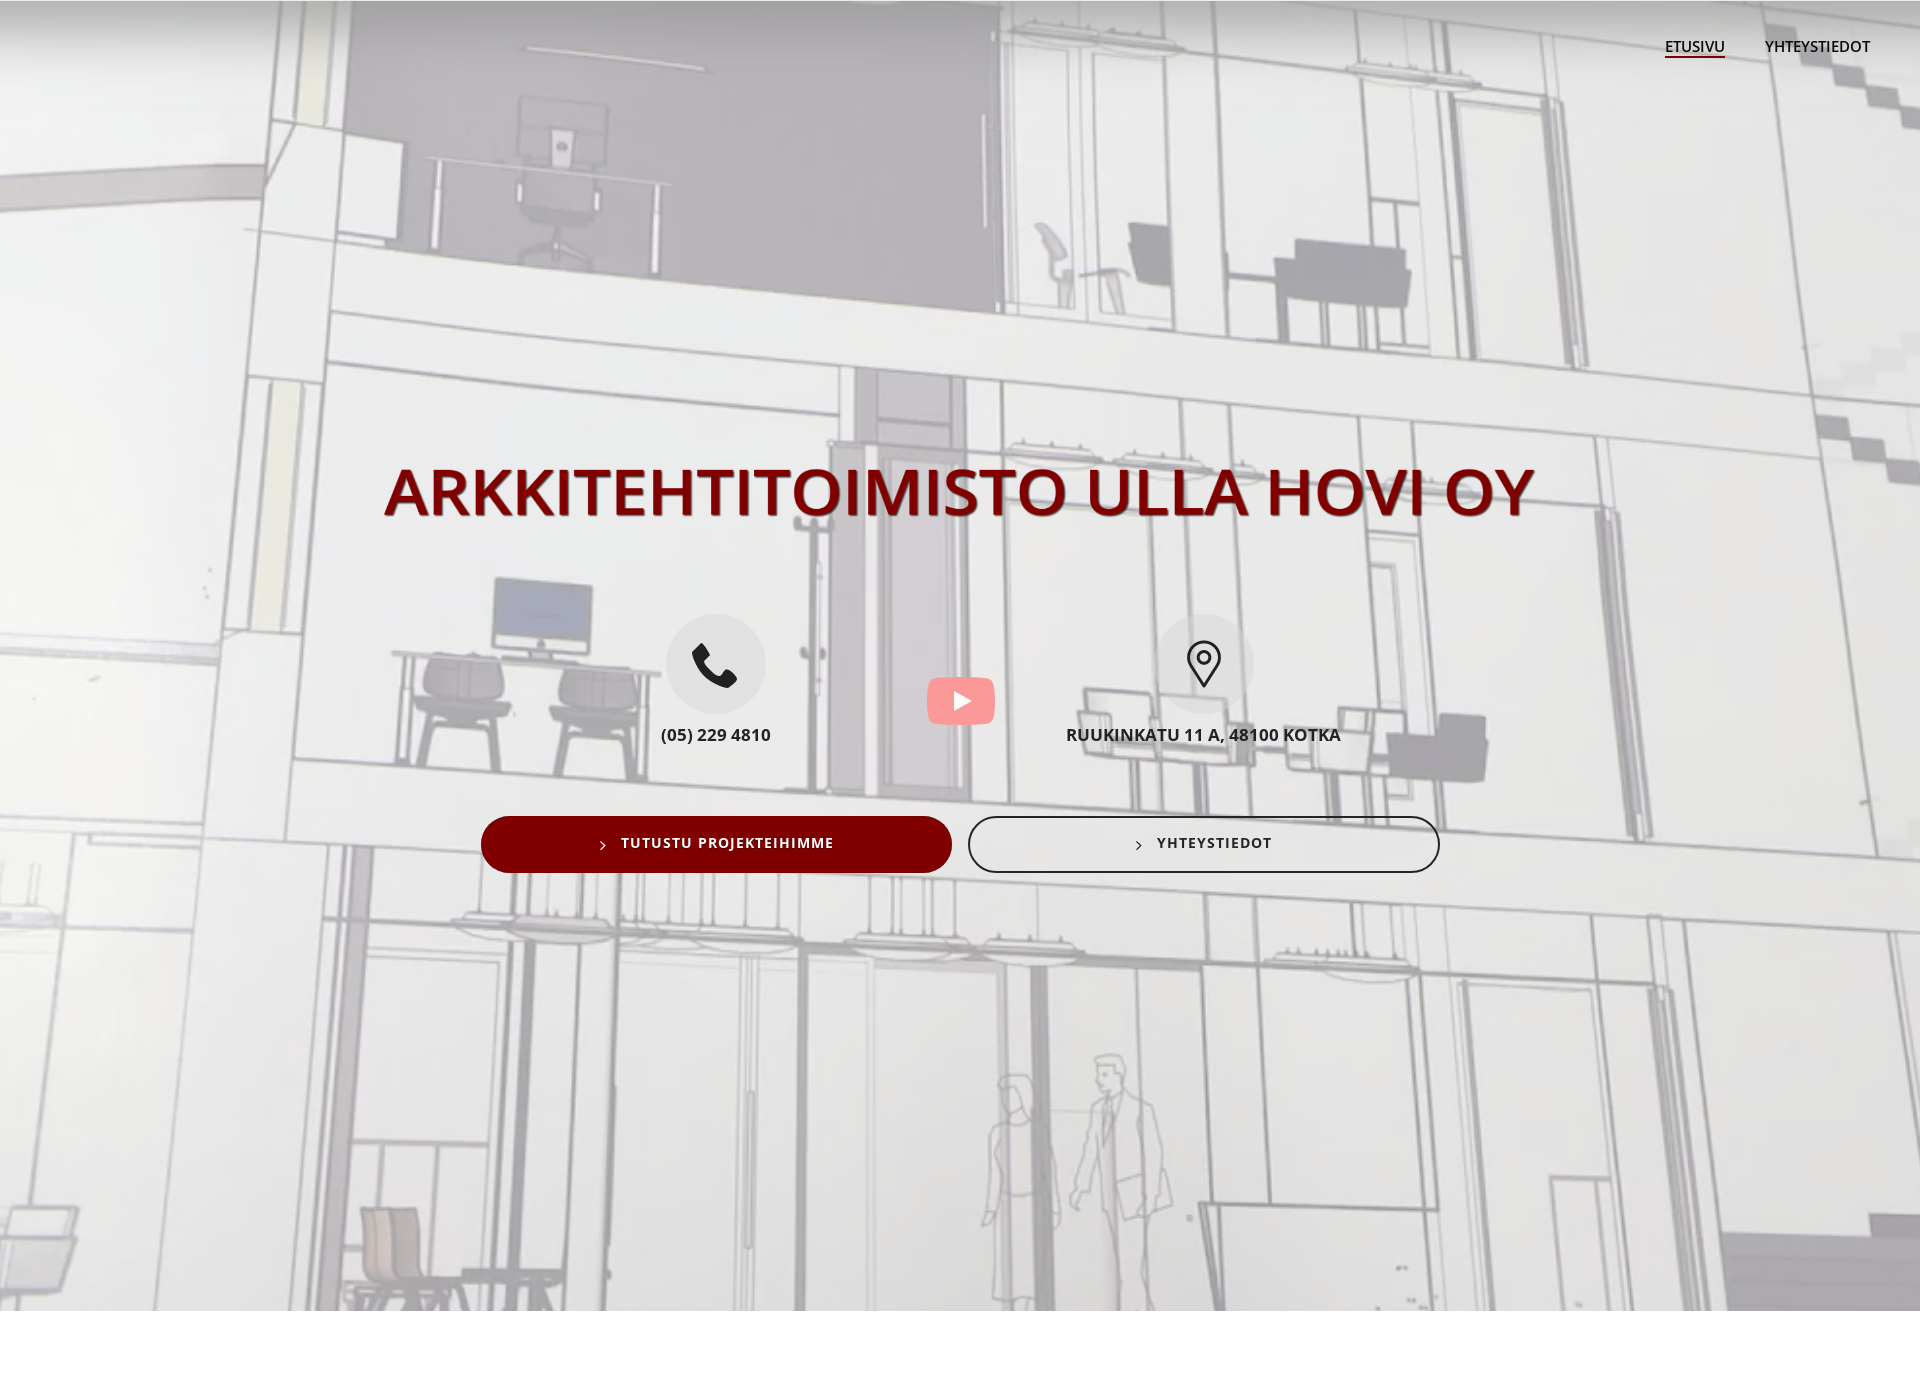 Skärmdump för arkkitehtitoimistoullahovi.fi